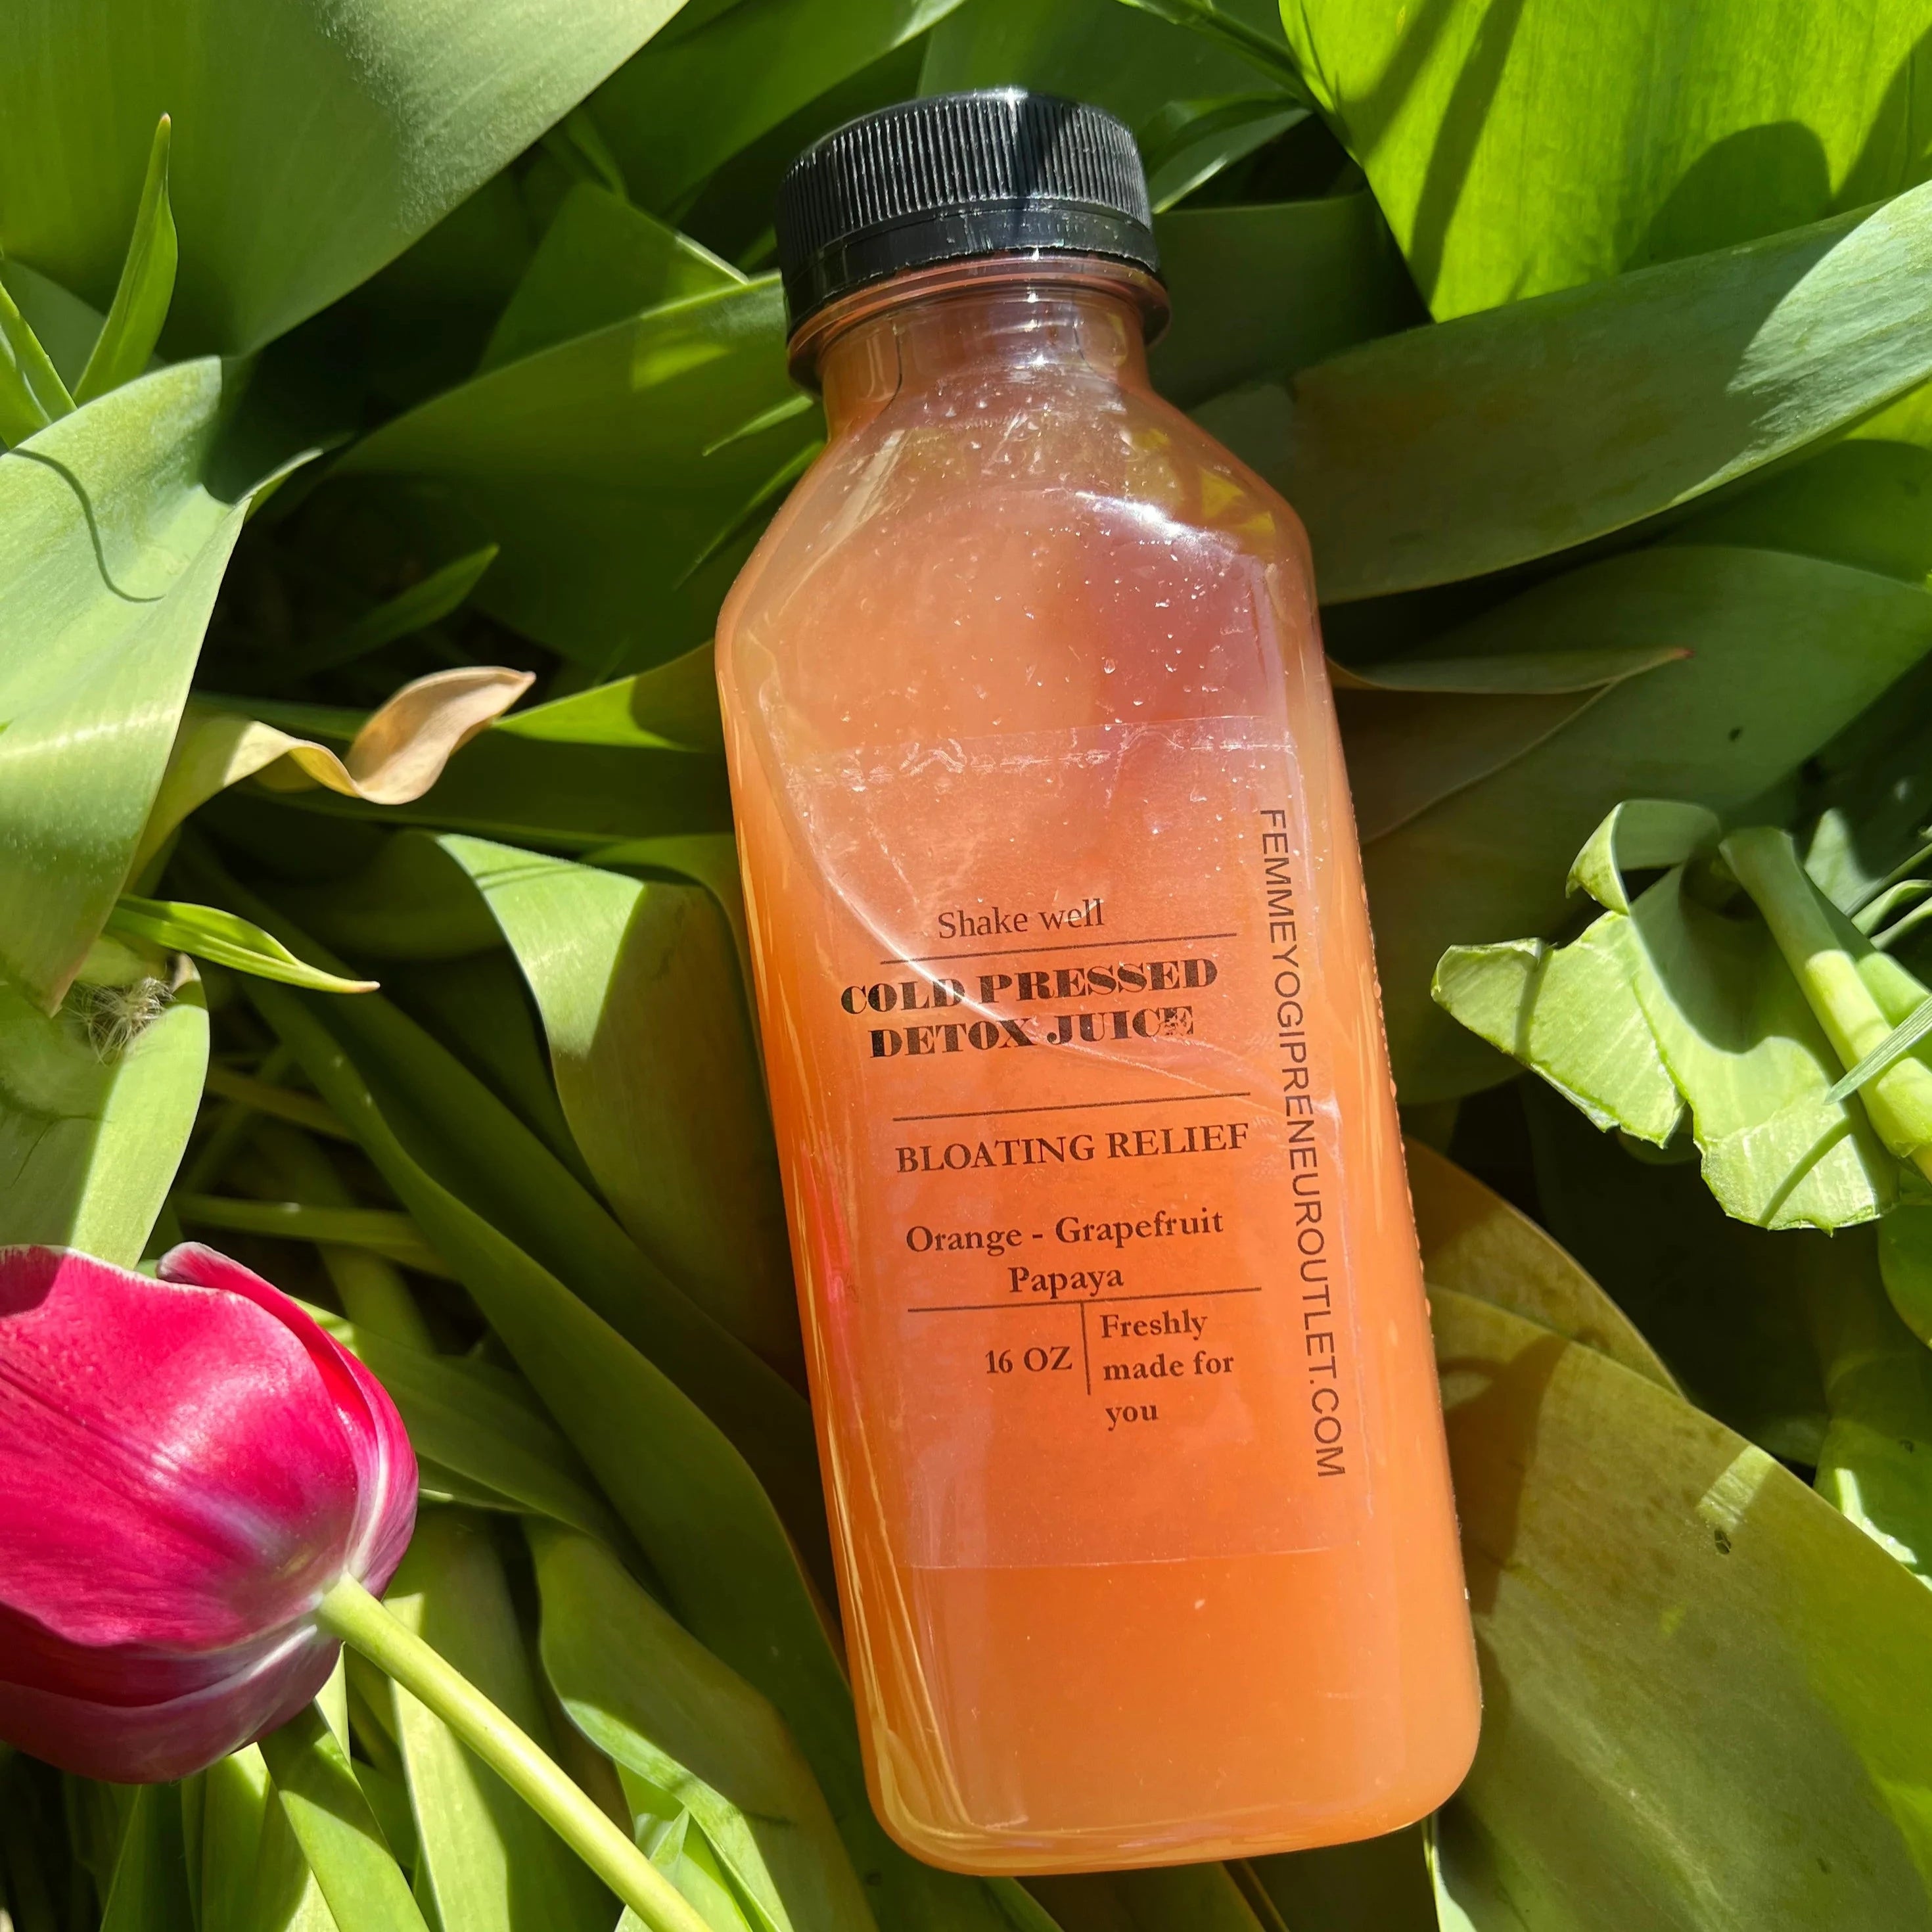 Cold pressed juice for bloating relief - Orange - Grapefruit & papaya drink -16 oz